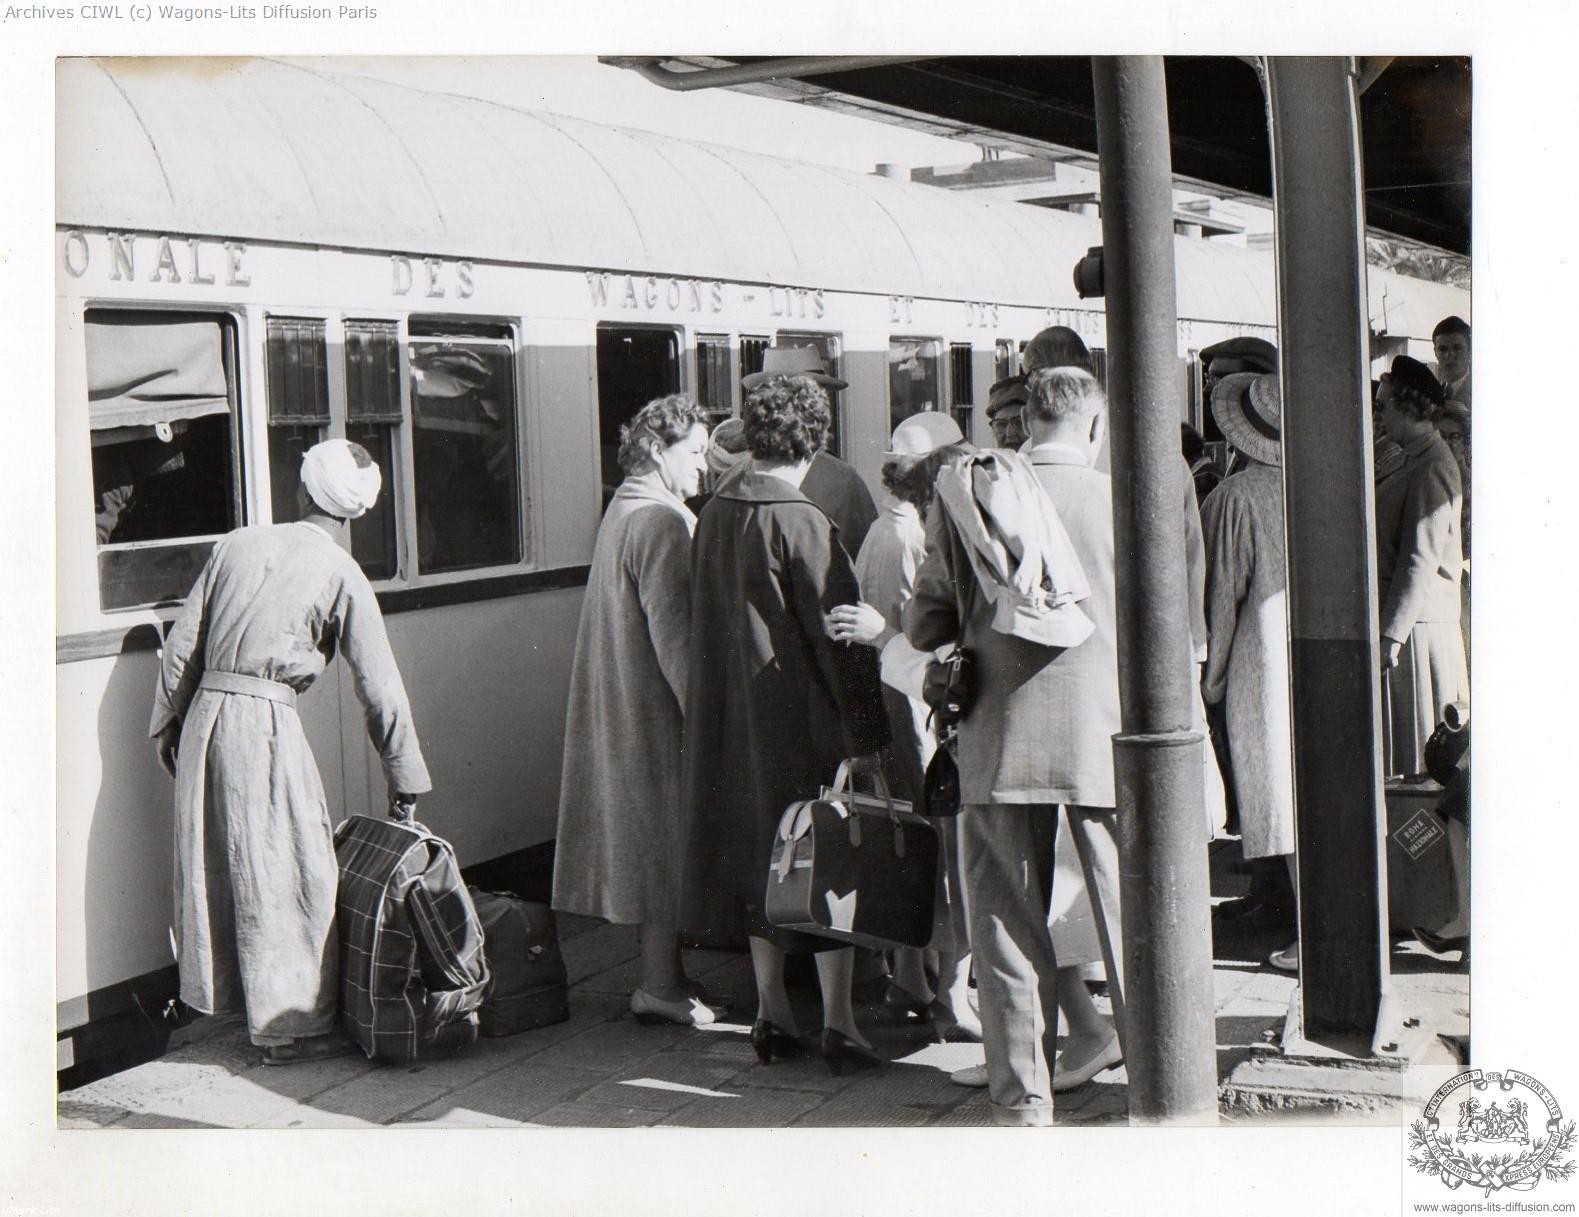 Wl egypt railways luxor train station in 1960 ciwlt coach